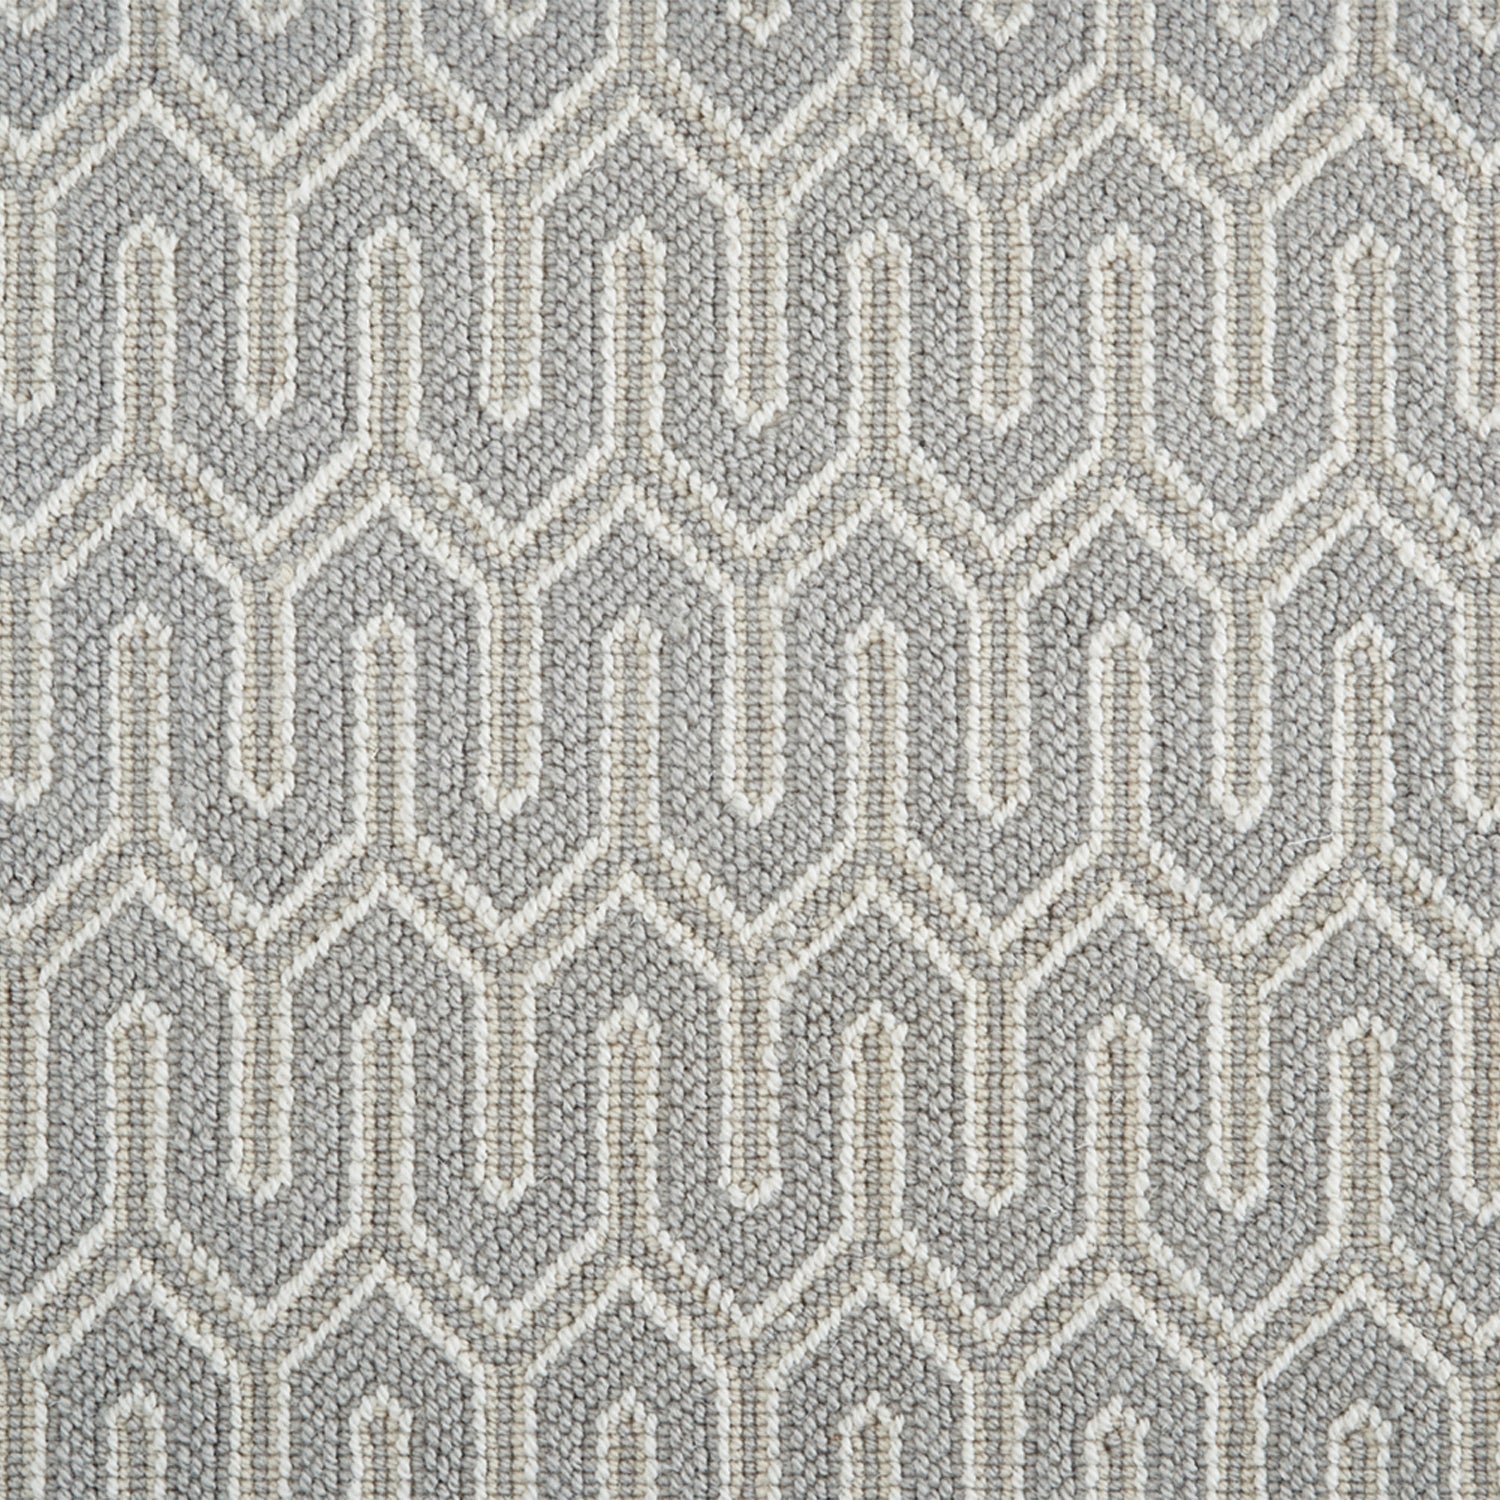 Wool-blend broadloom carpet swatch in a chunky geometric linear weave in tan and gray.